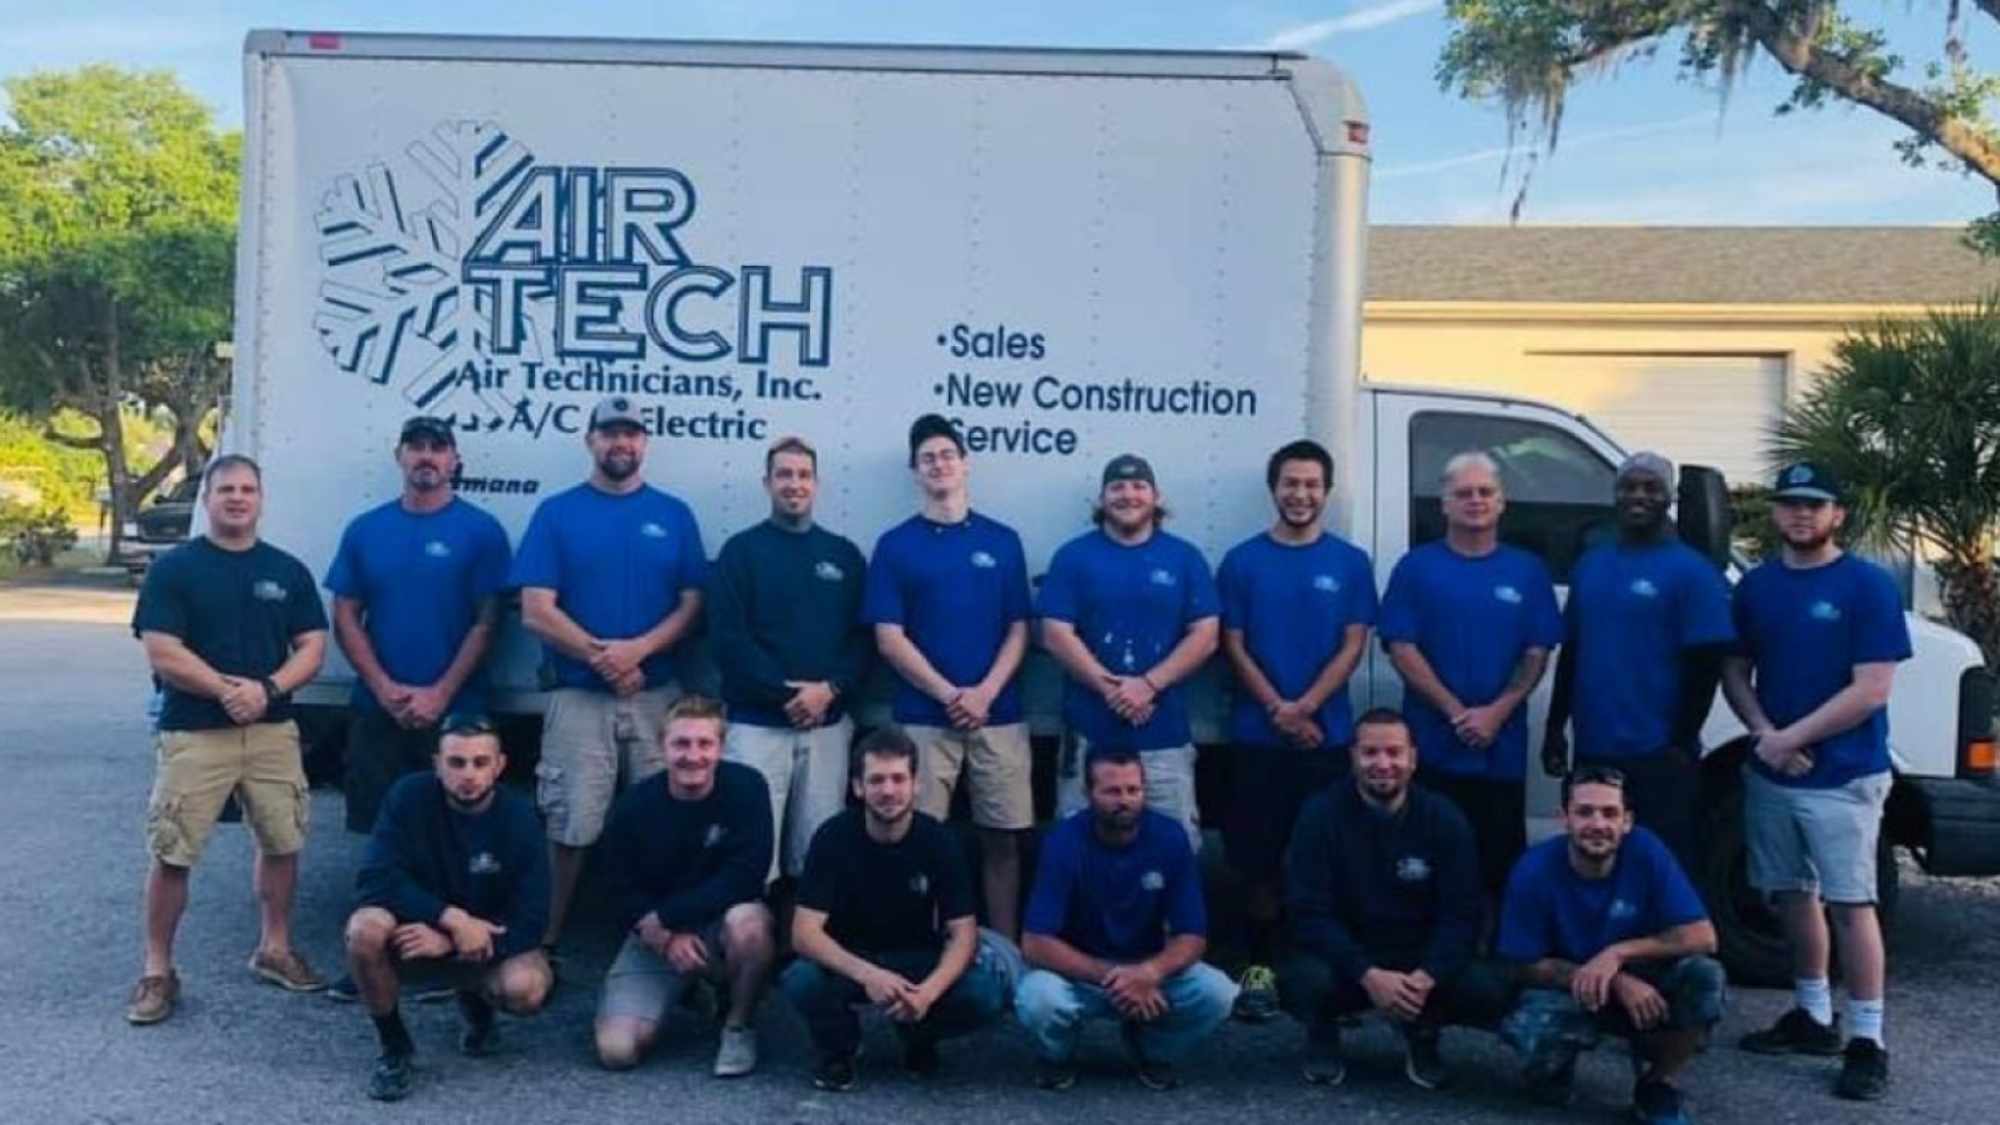 Air Technicians, Inc